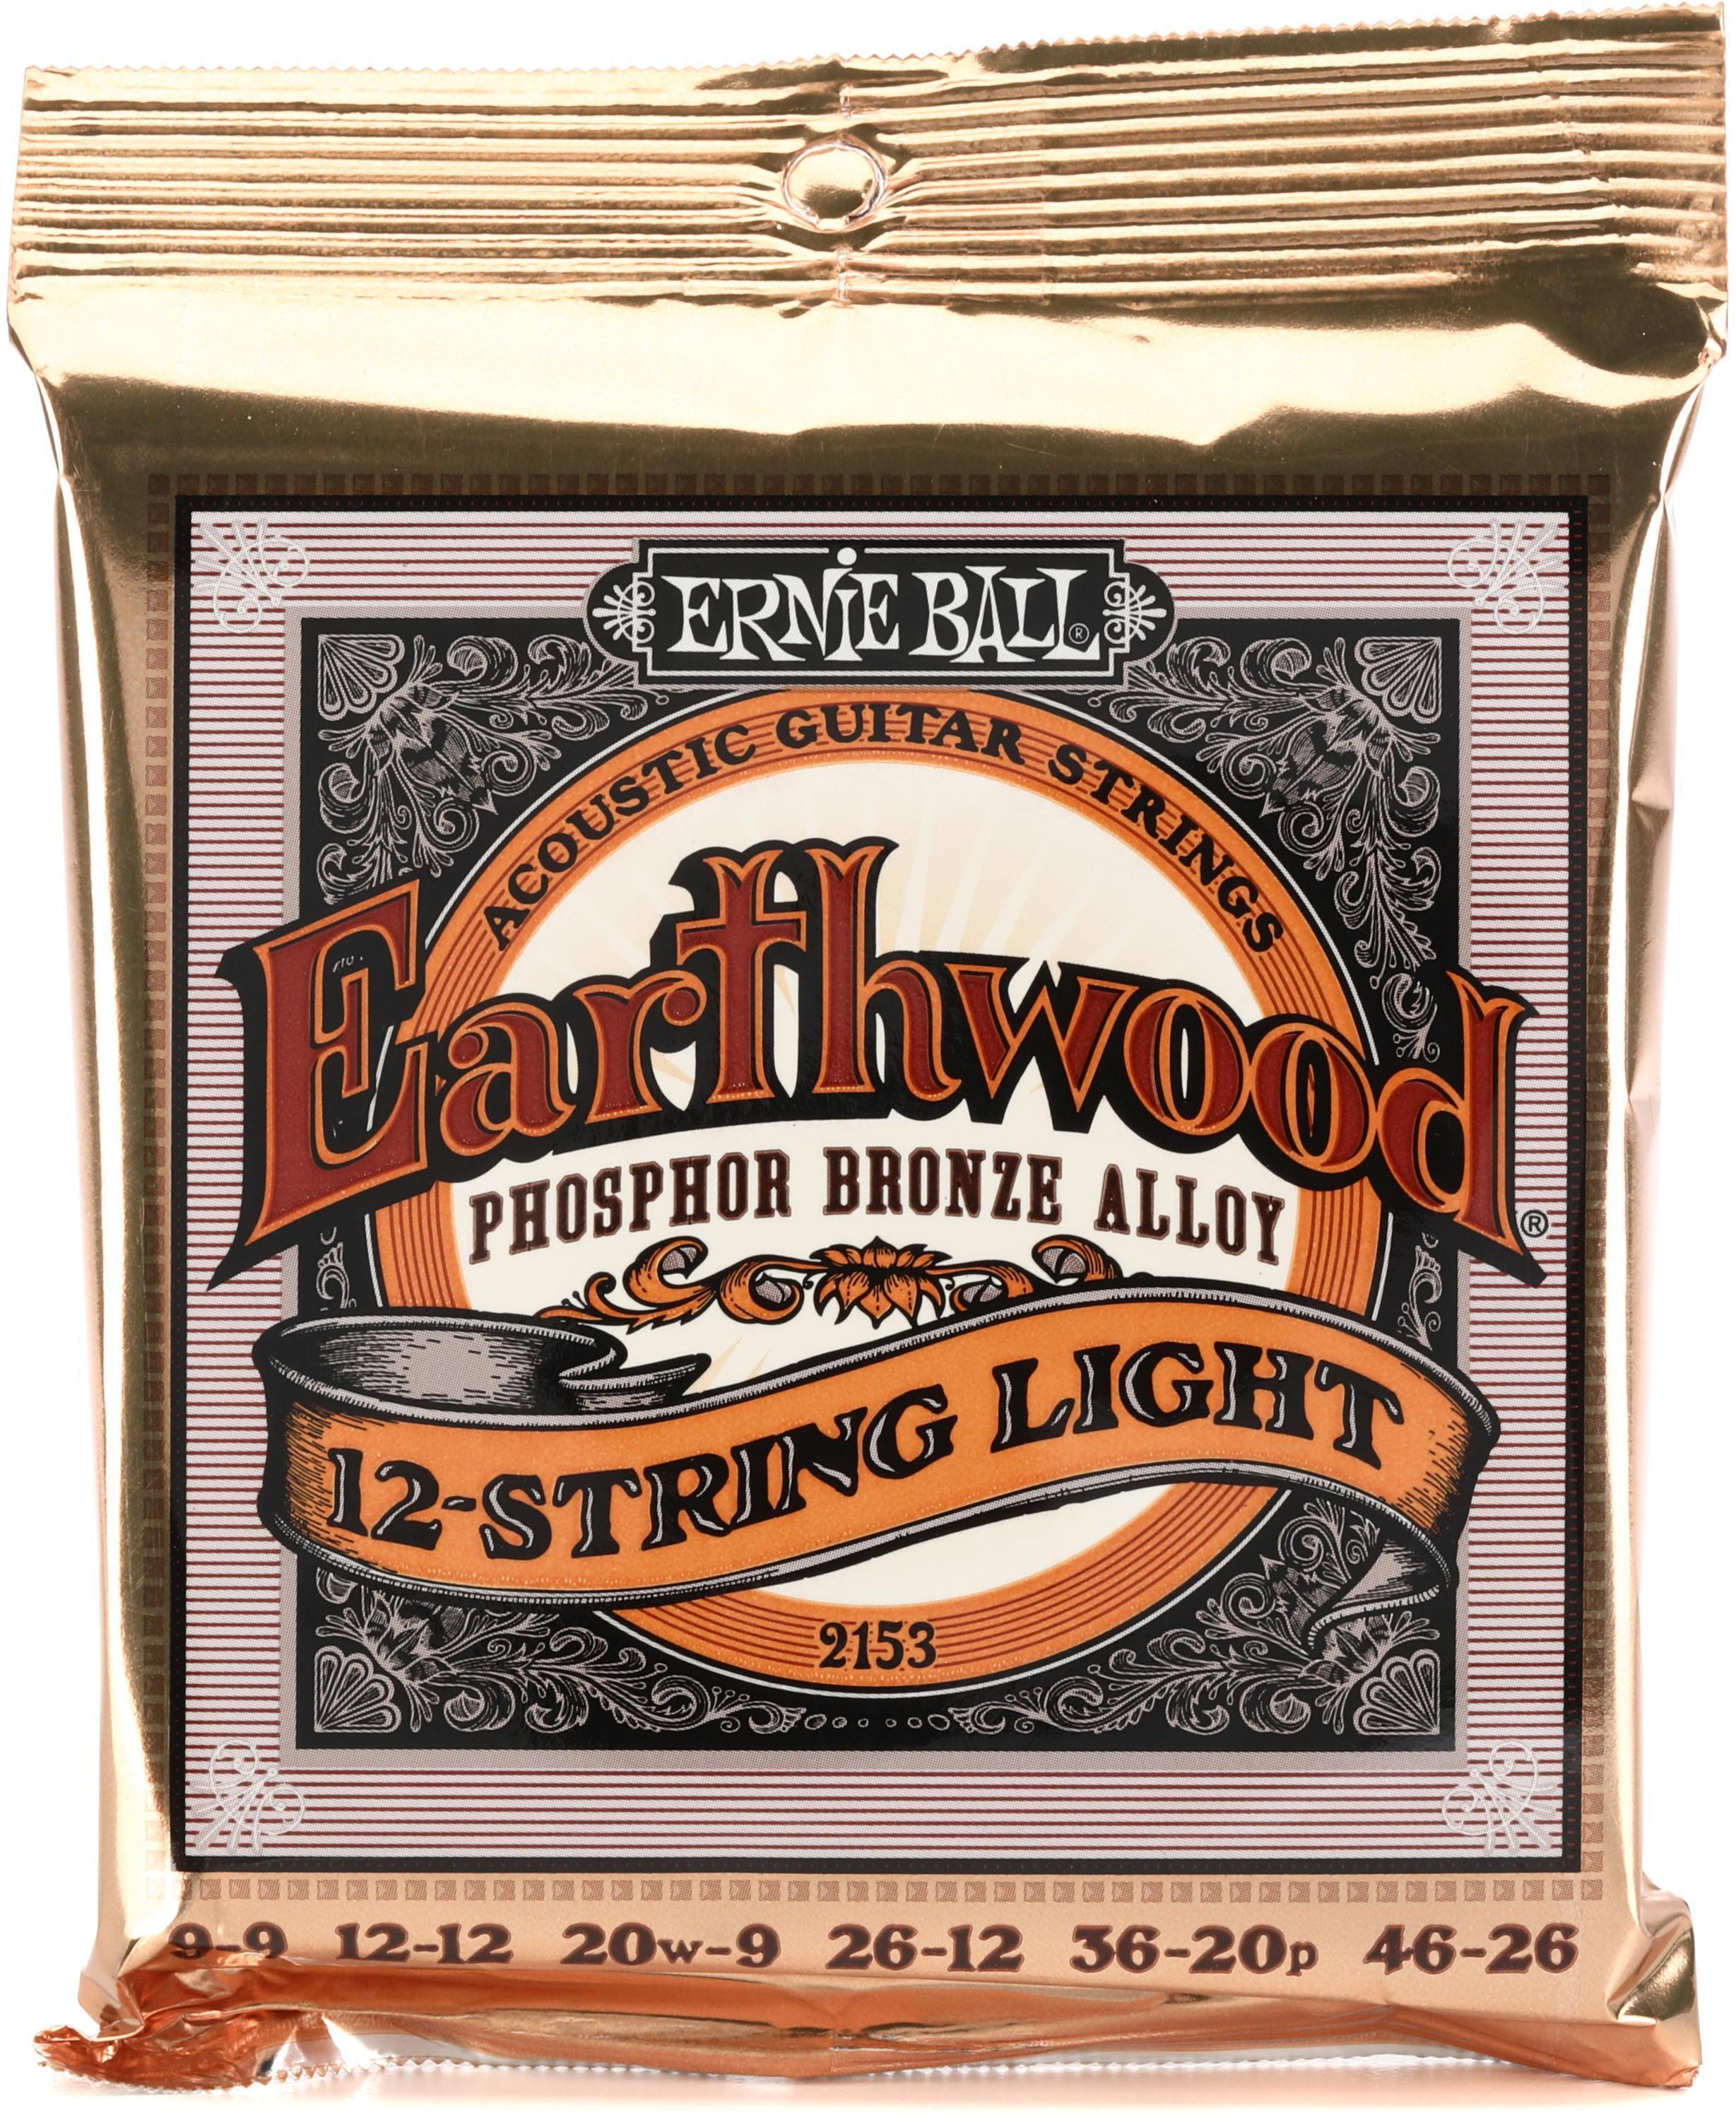 Ernie Ball 2153 Earthwood Phosphor Bronze Acoustic Guitar Strings -  .009-.046 Light 12-string | Sweetwater